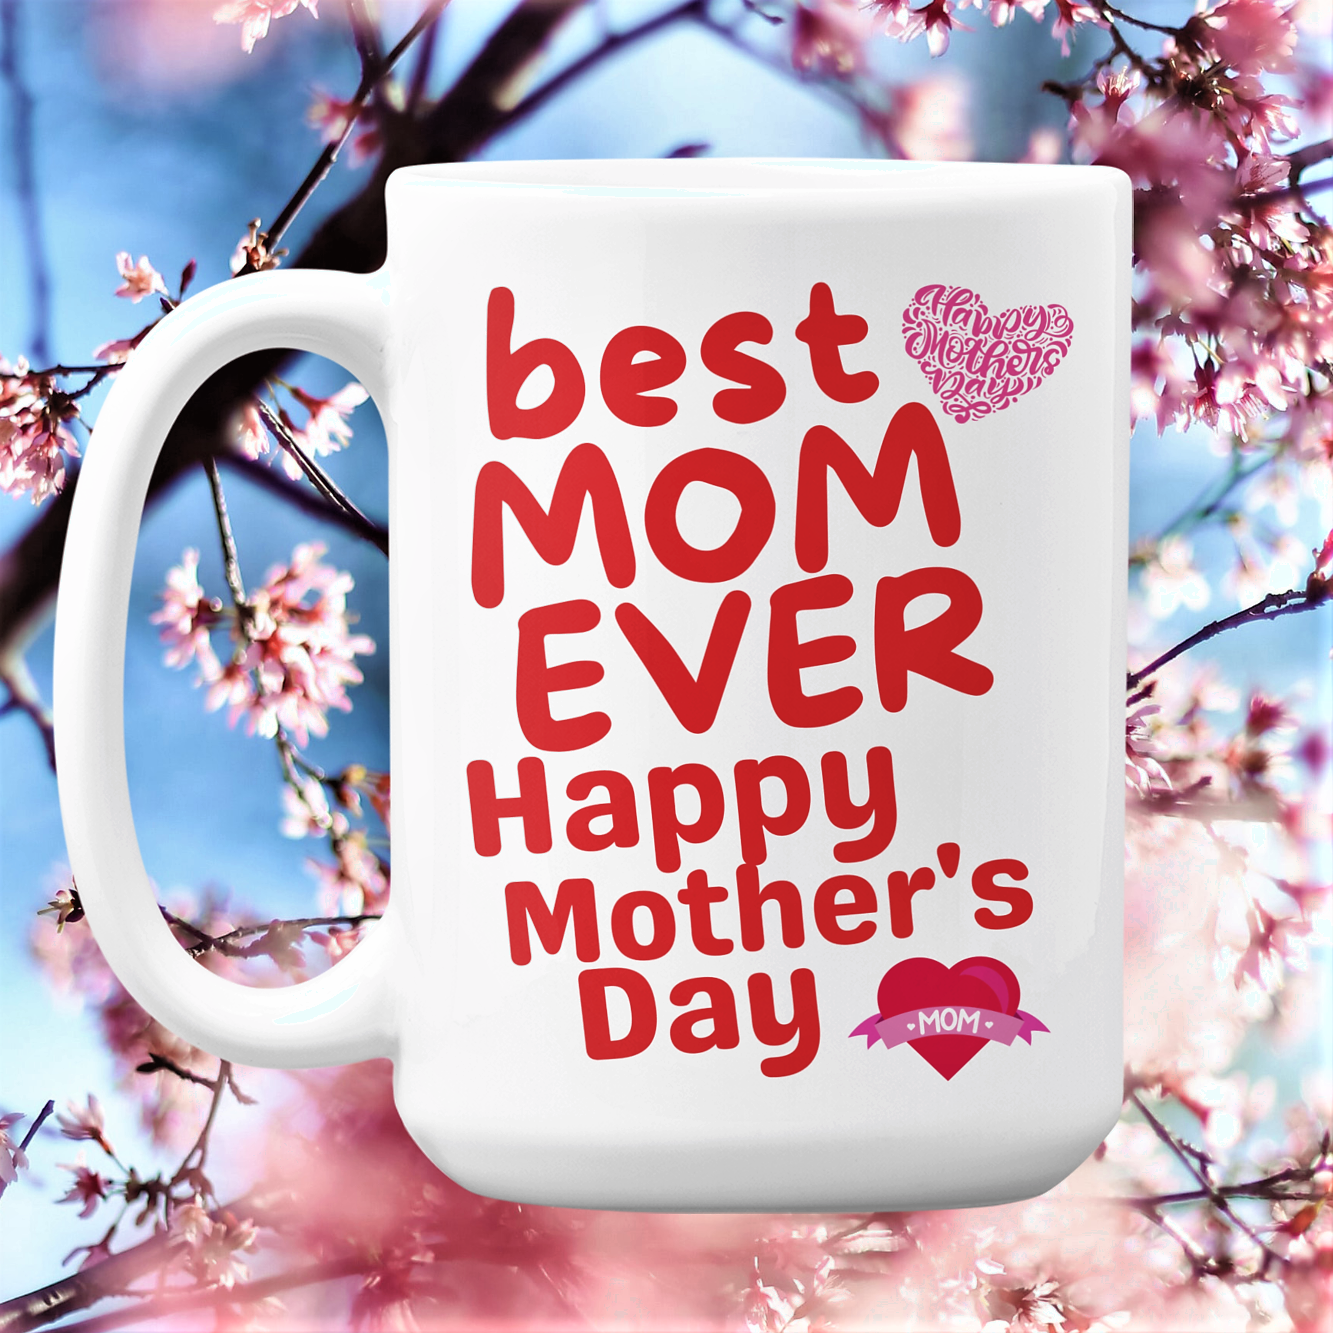 Mother's Day Gift for Mom - Coffee Mug